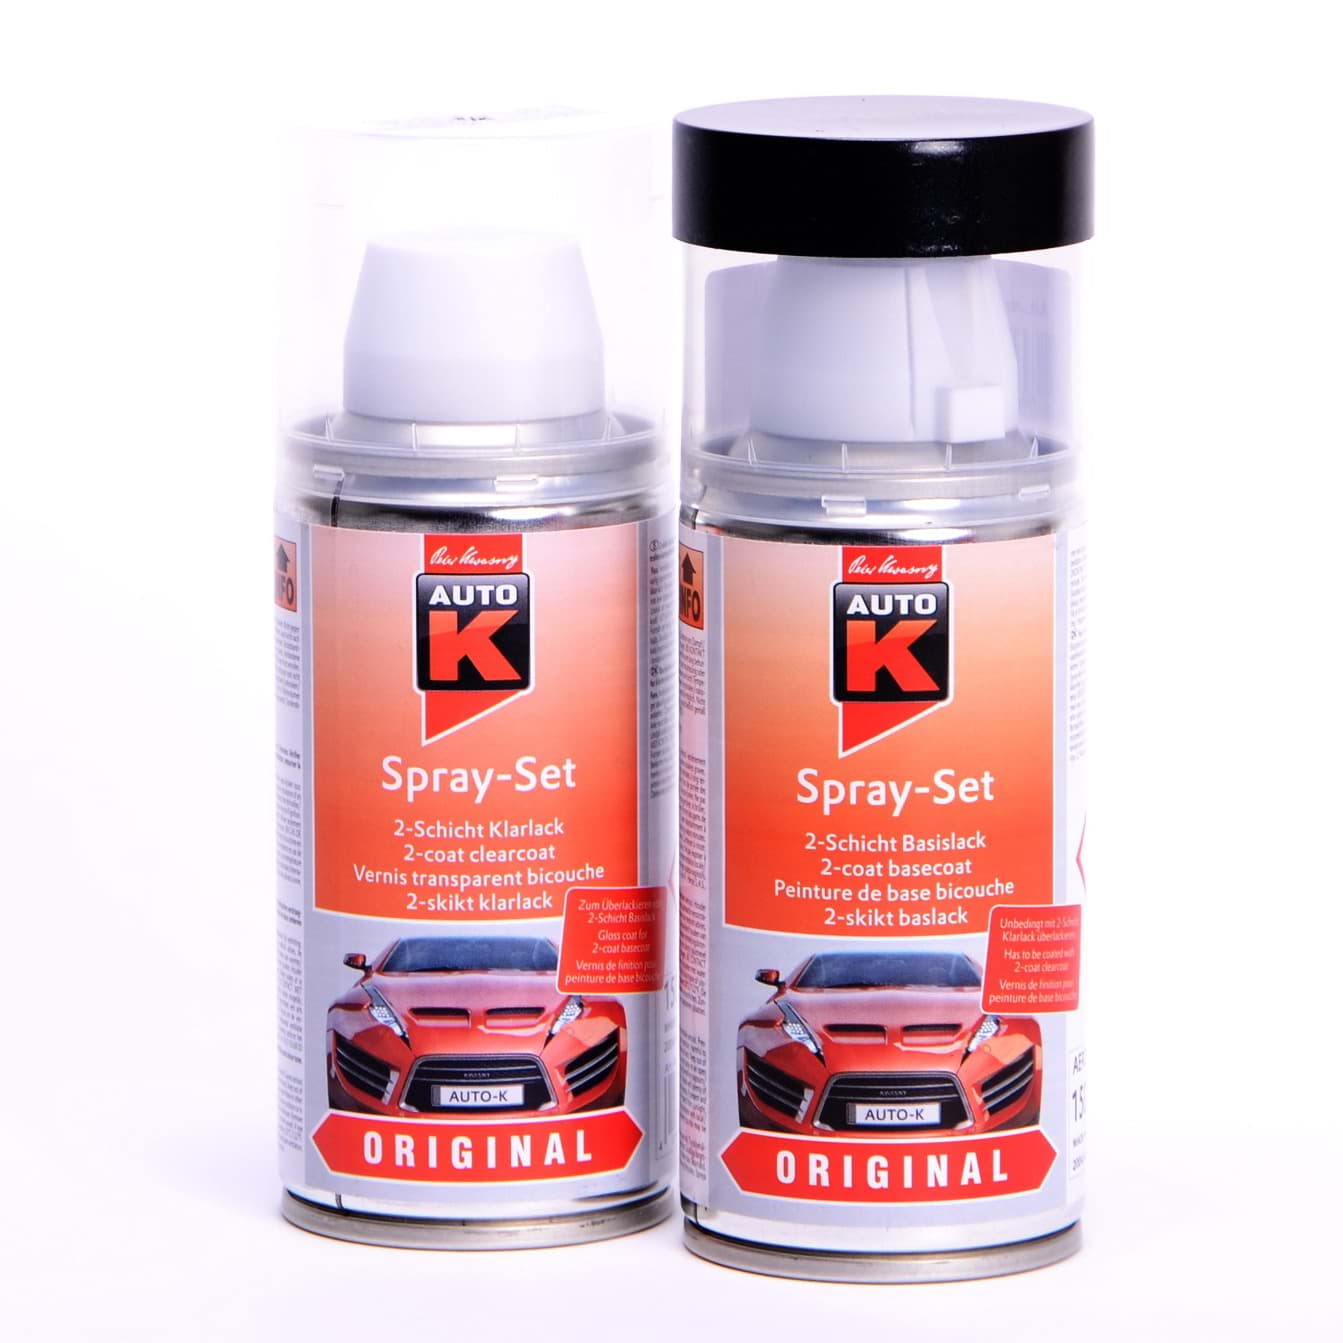 Afbeelding van Auto-K Spray-Set Autolack für Volkswagen, VW, Audi LB9A Candyweiß 20759